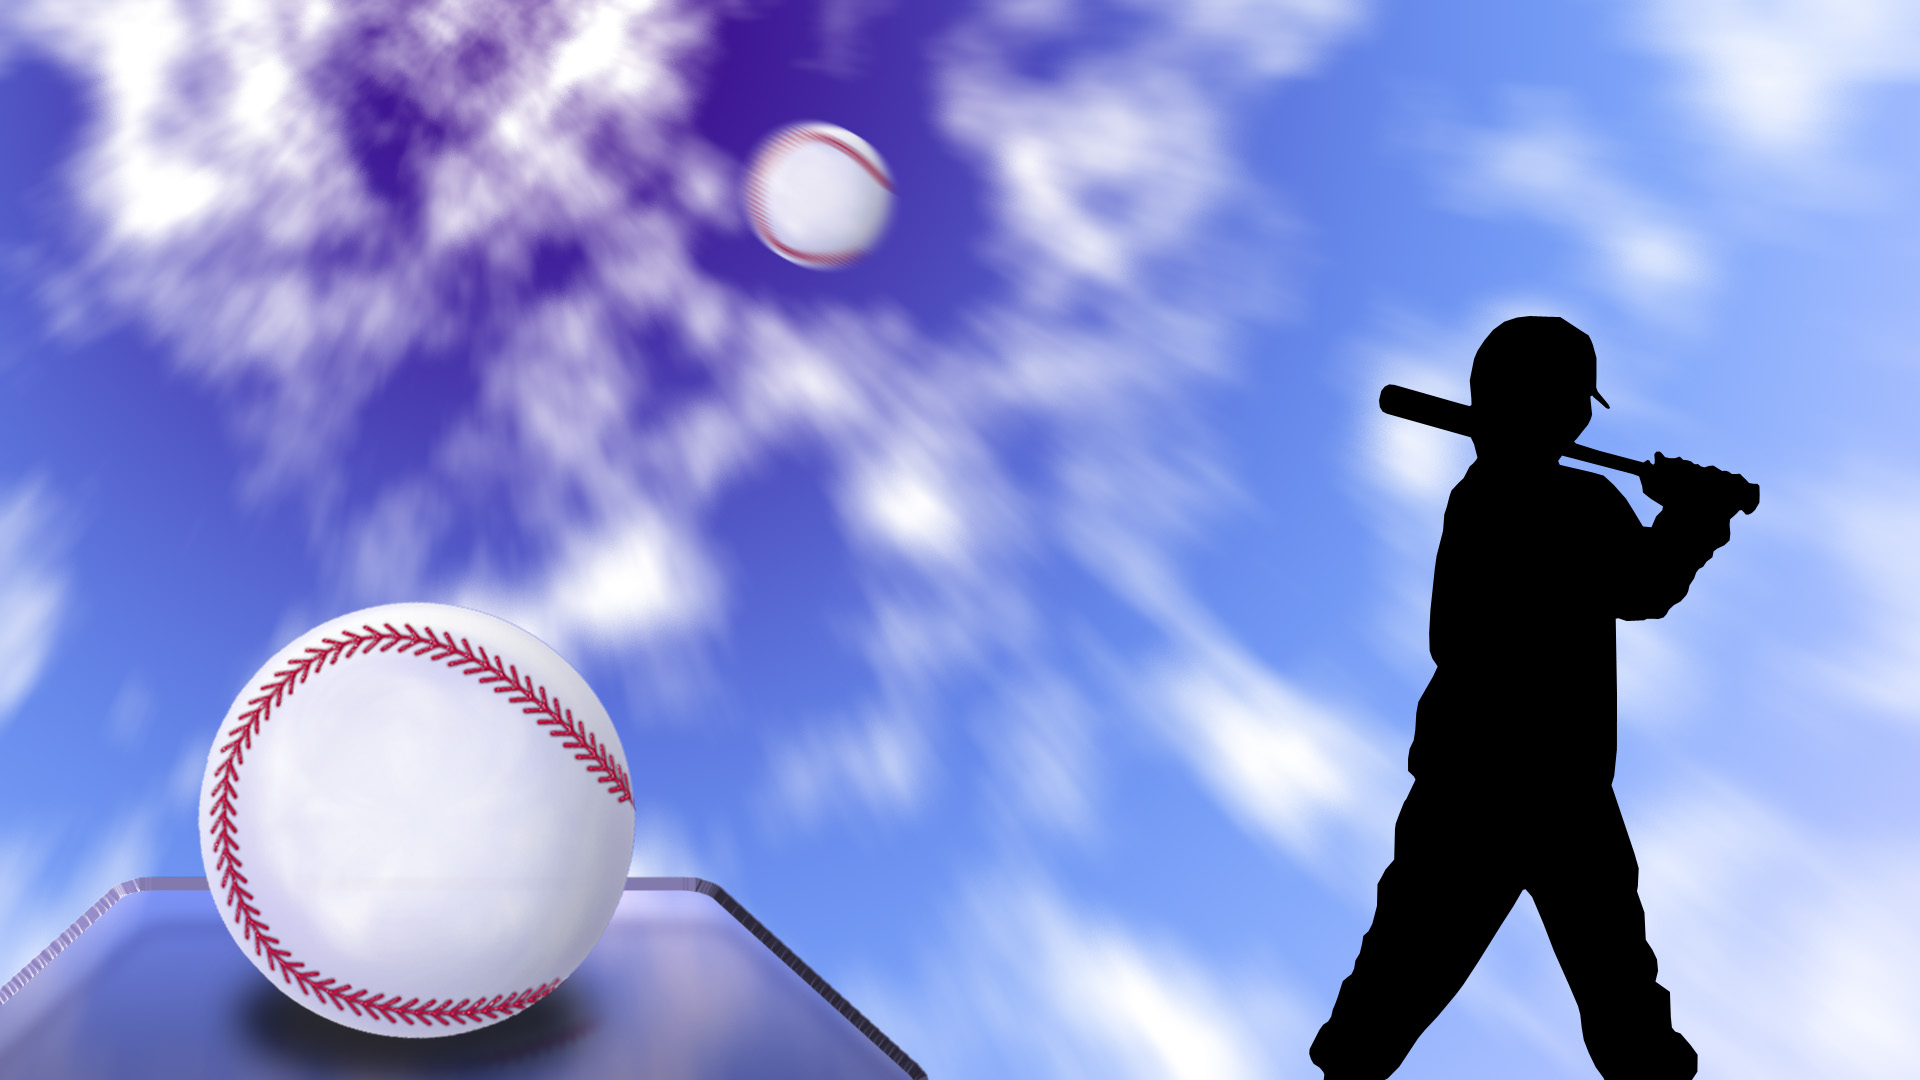 Baseball Background Image Daily Fantasy Sports Res